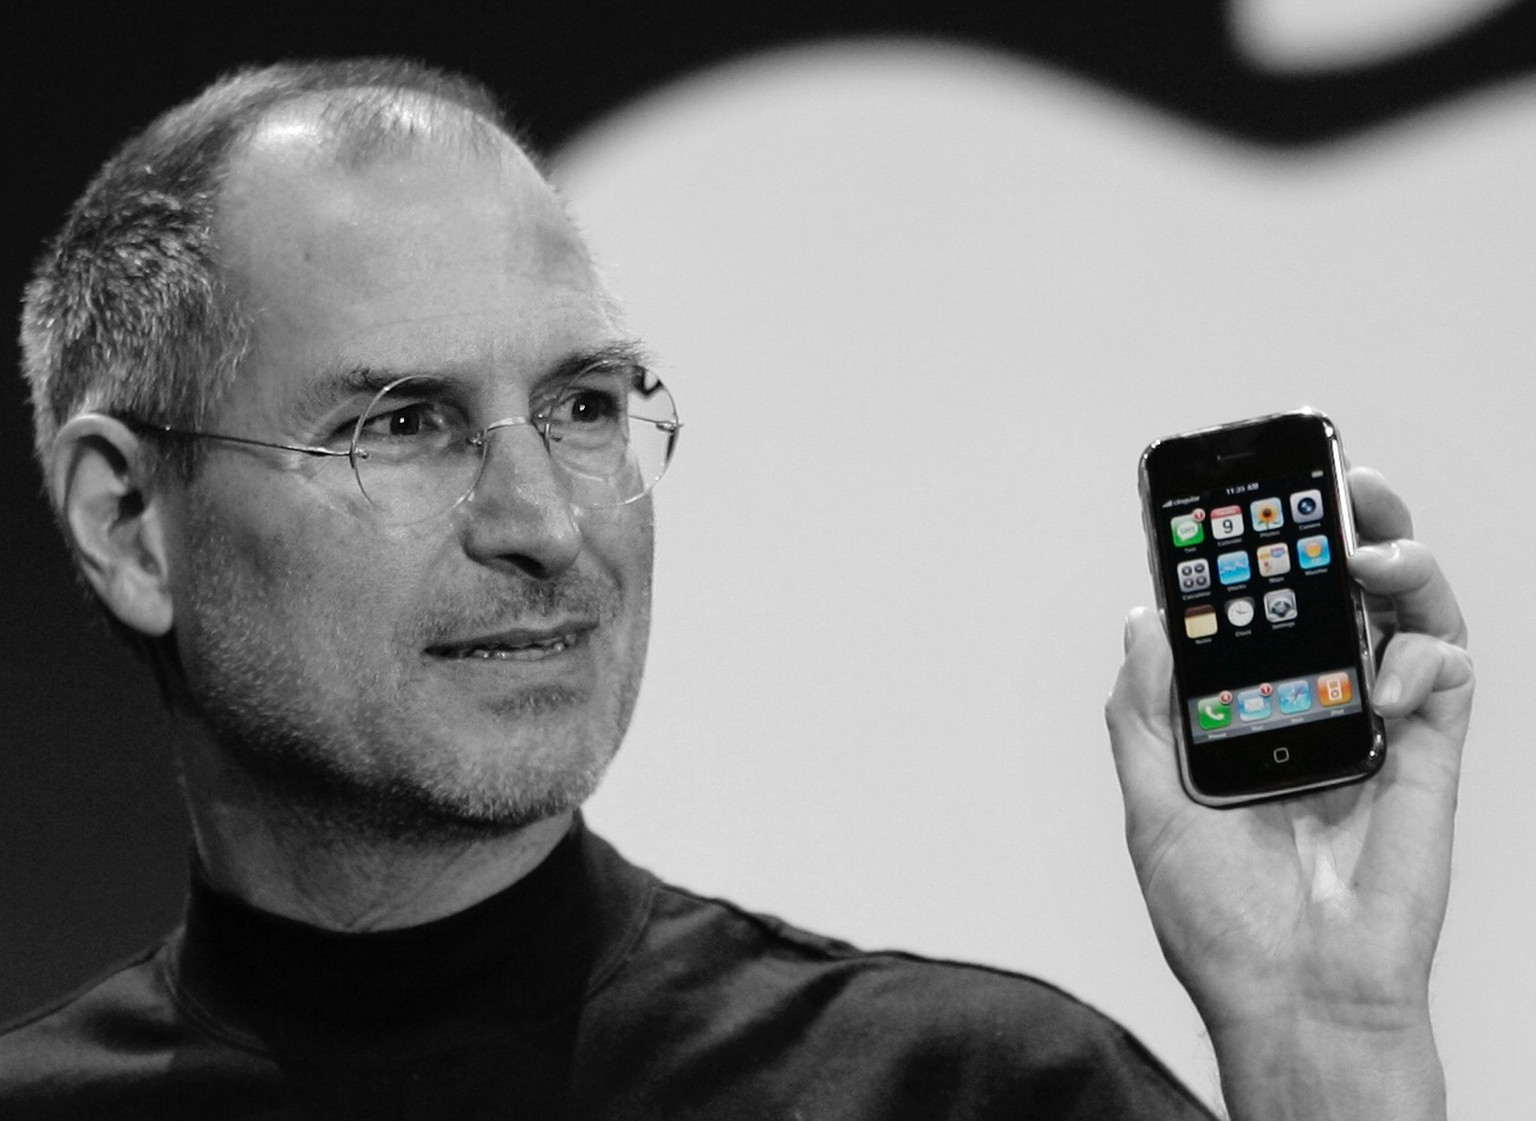 2007 stand Steve Jobs am Beginn einer Revolution ...